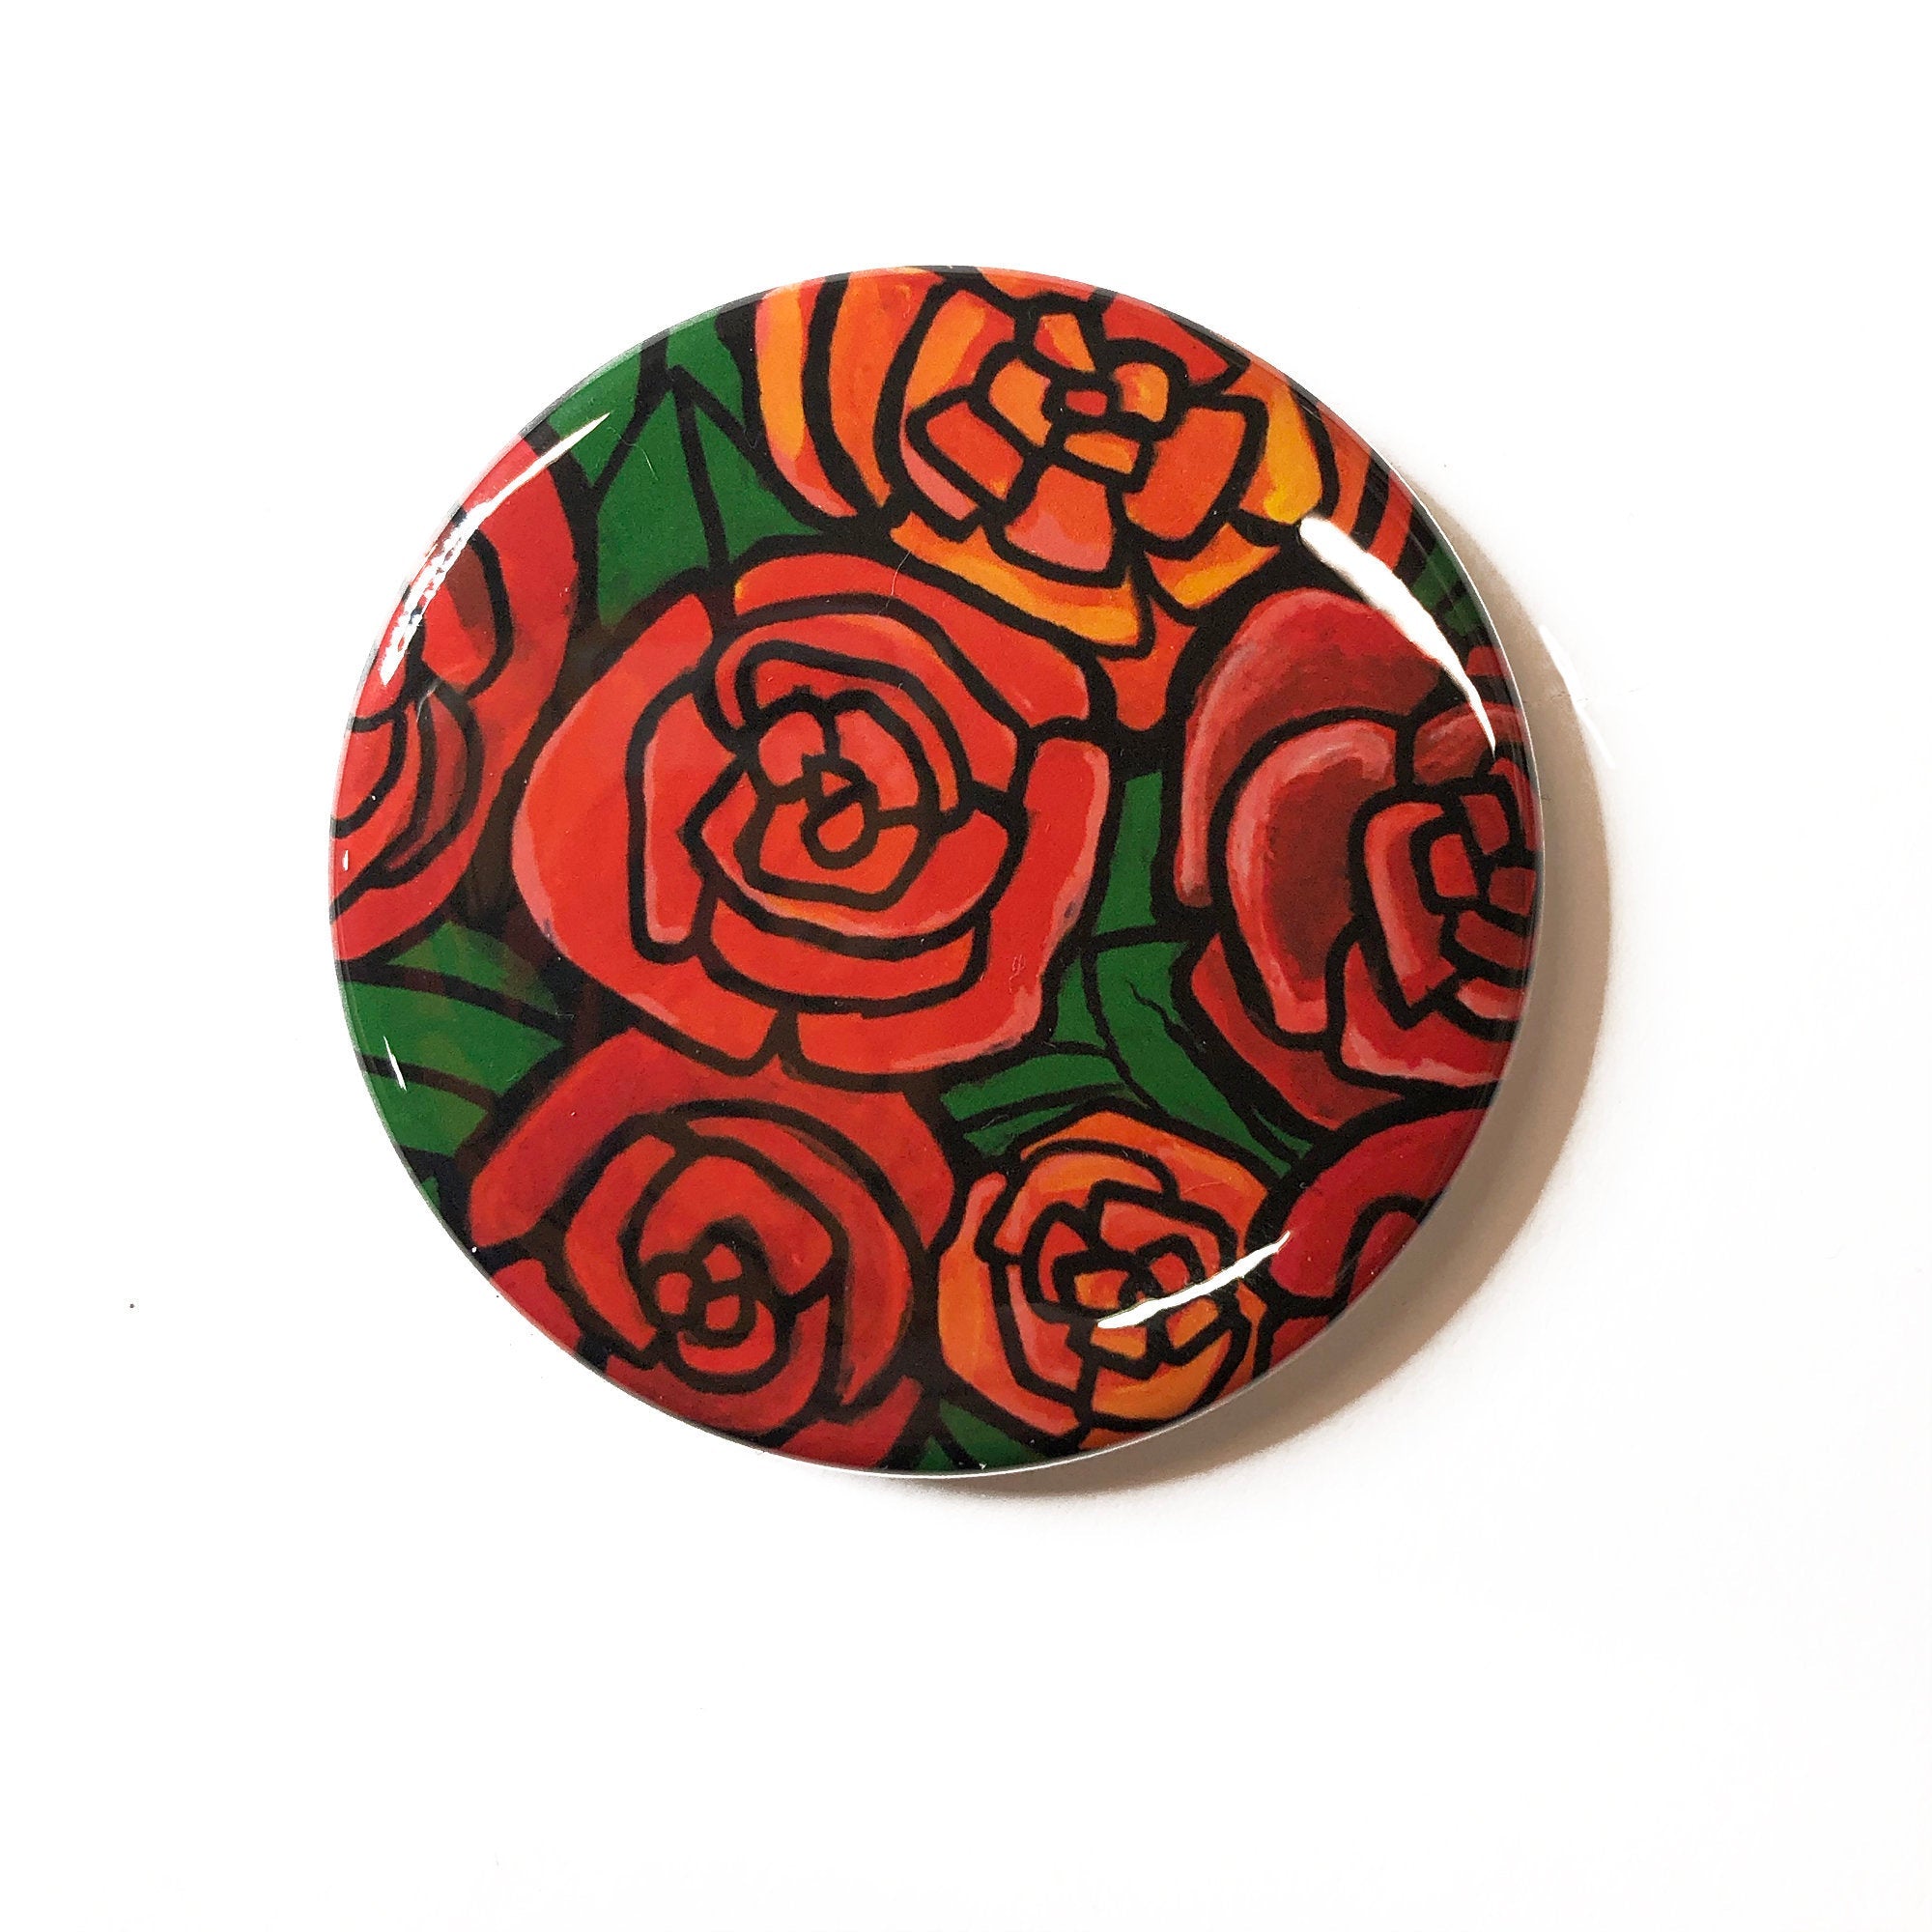 Red Roses Pocket Mirror, Fridge Magnet, or Pin Back Button - Floral Party Favor, Stocking Stuffer, Gift Under 5 dollars